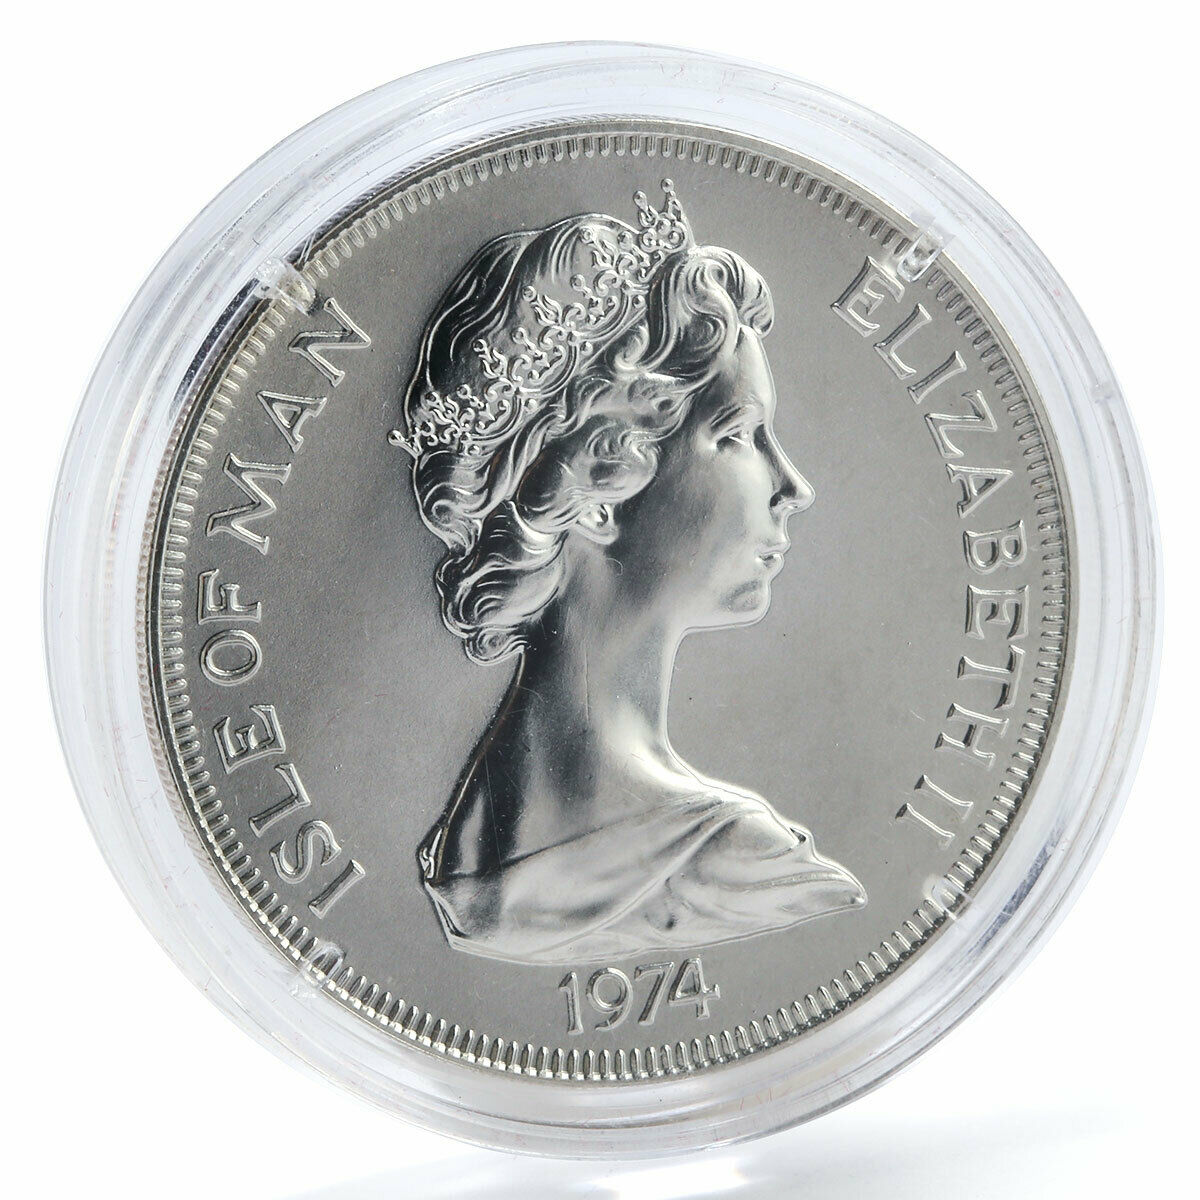 Isle of Man 1 crown Winston Churchill silver coin 1974